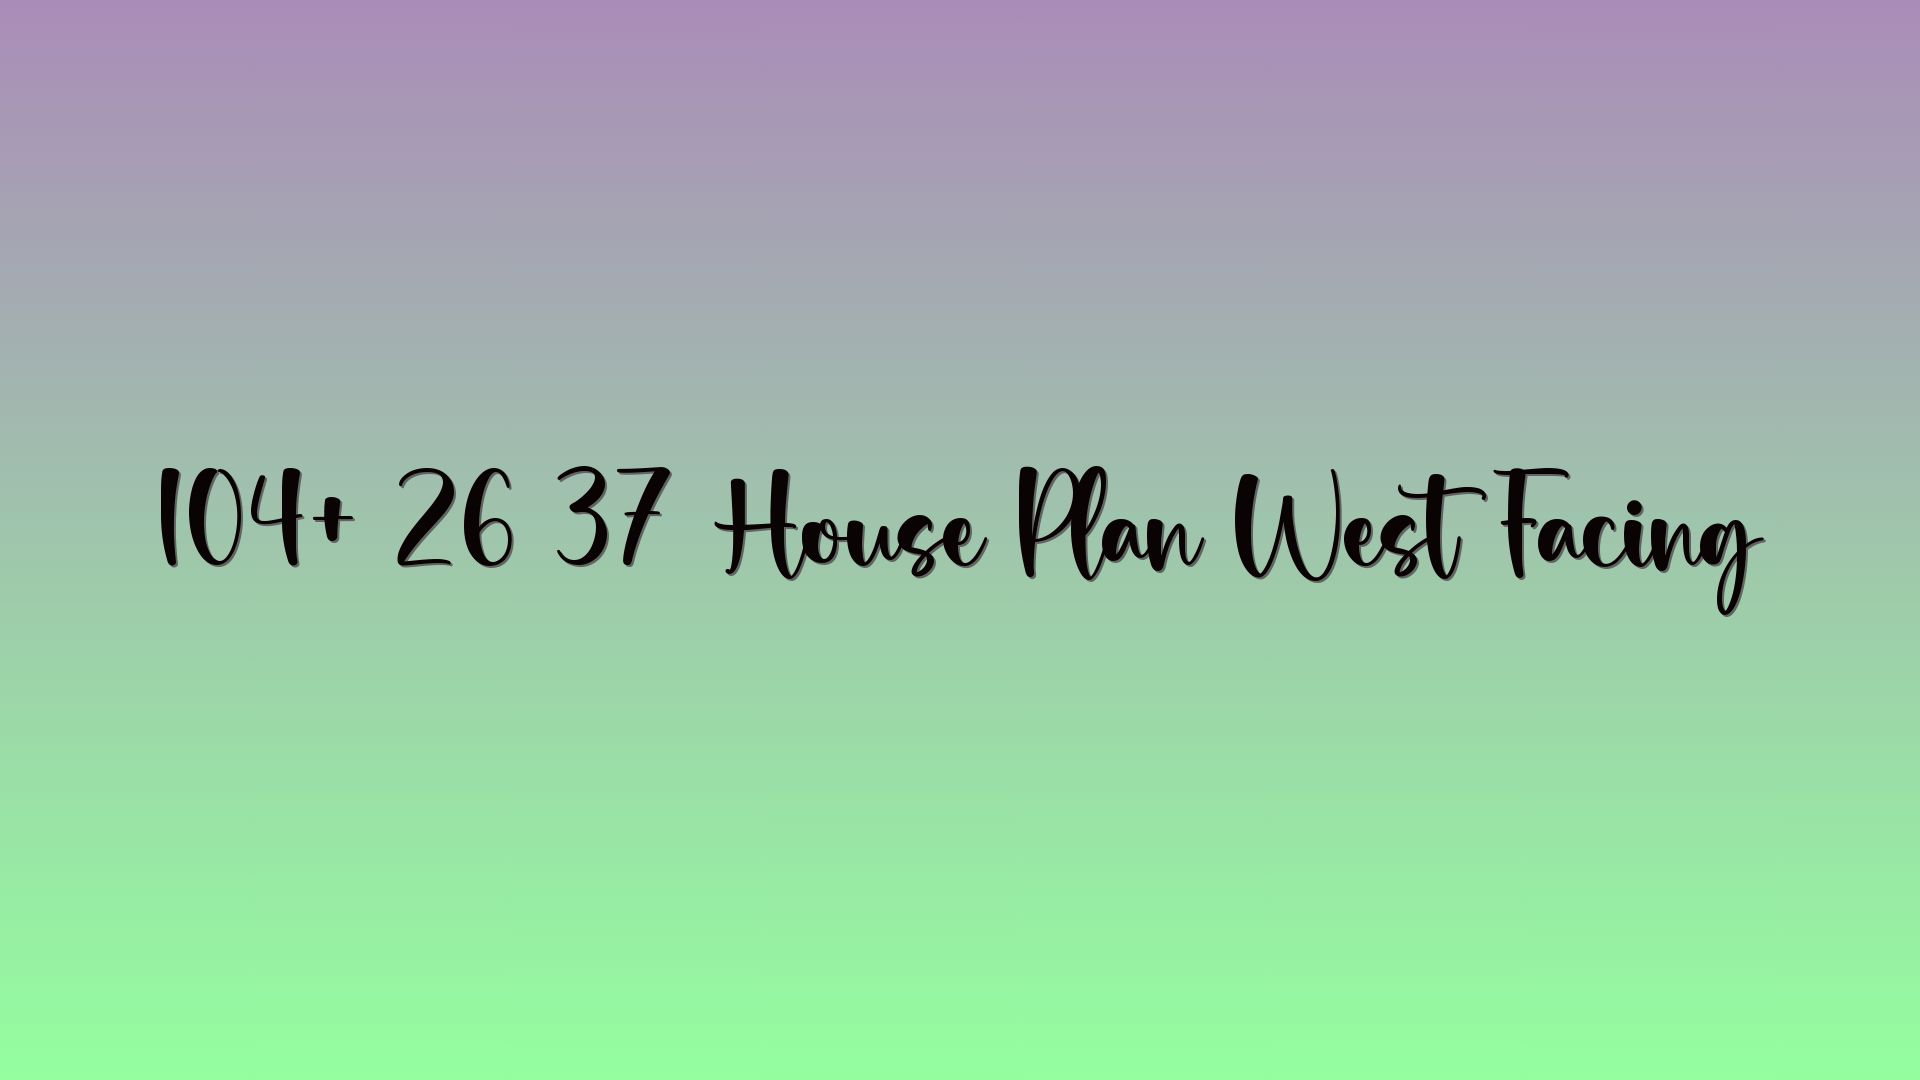 104+ 26 37 House Plan West Facing